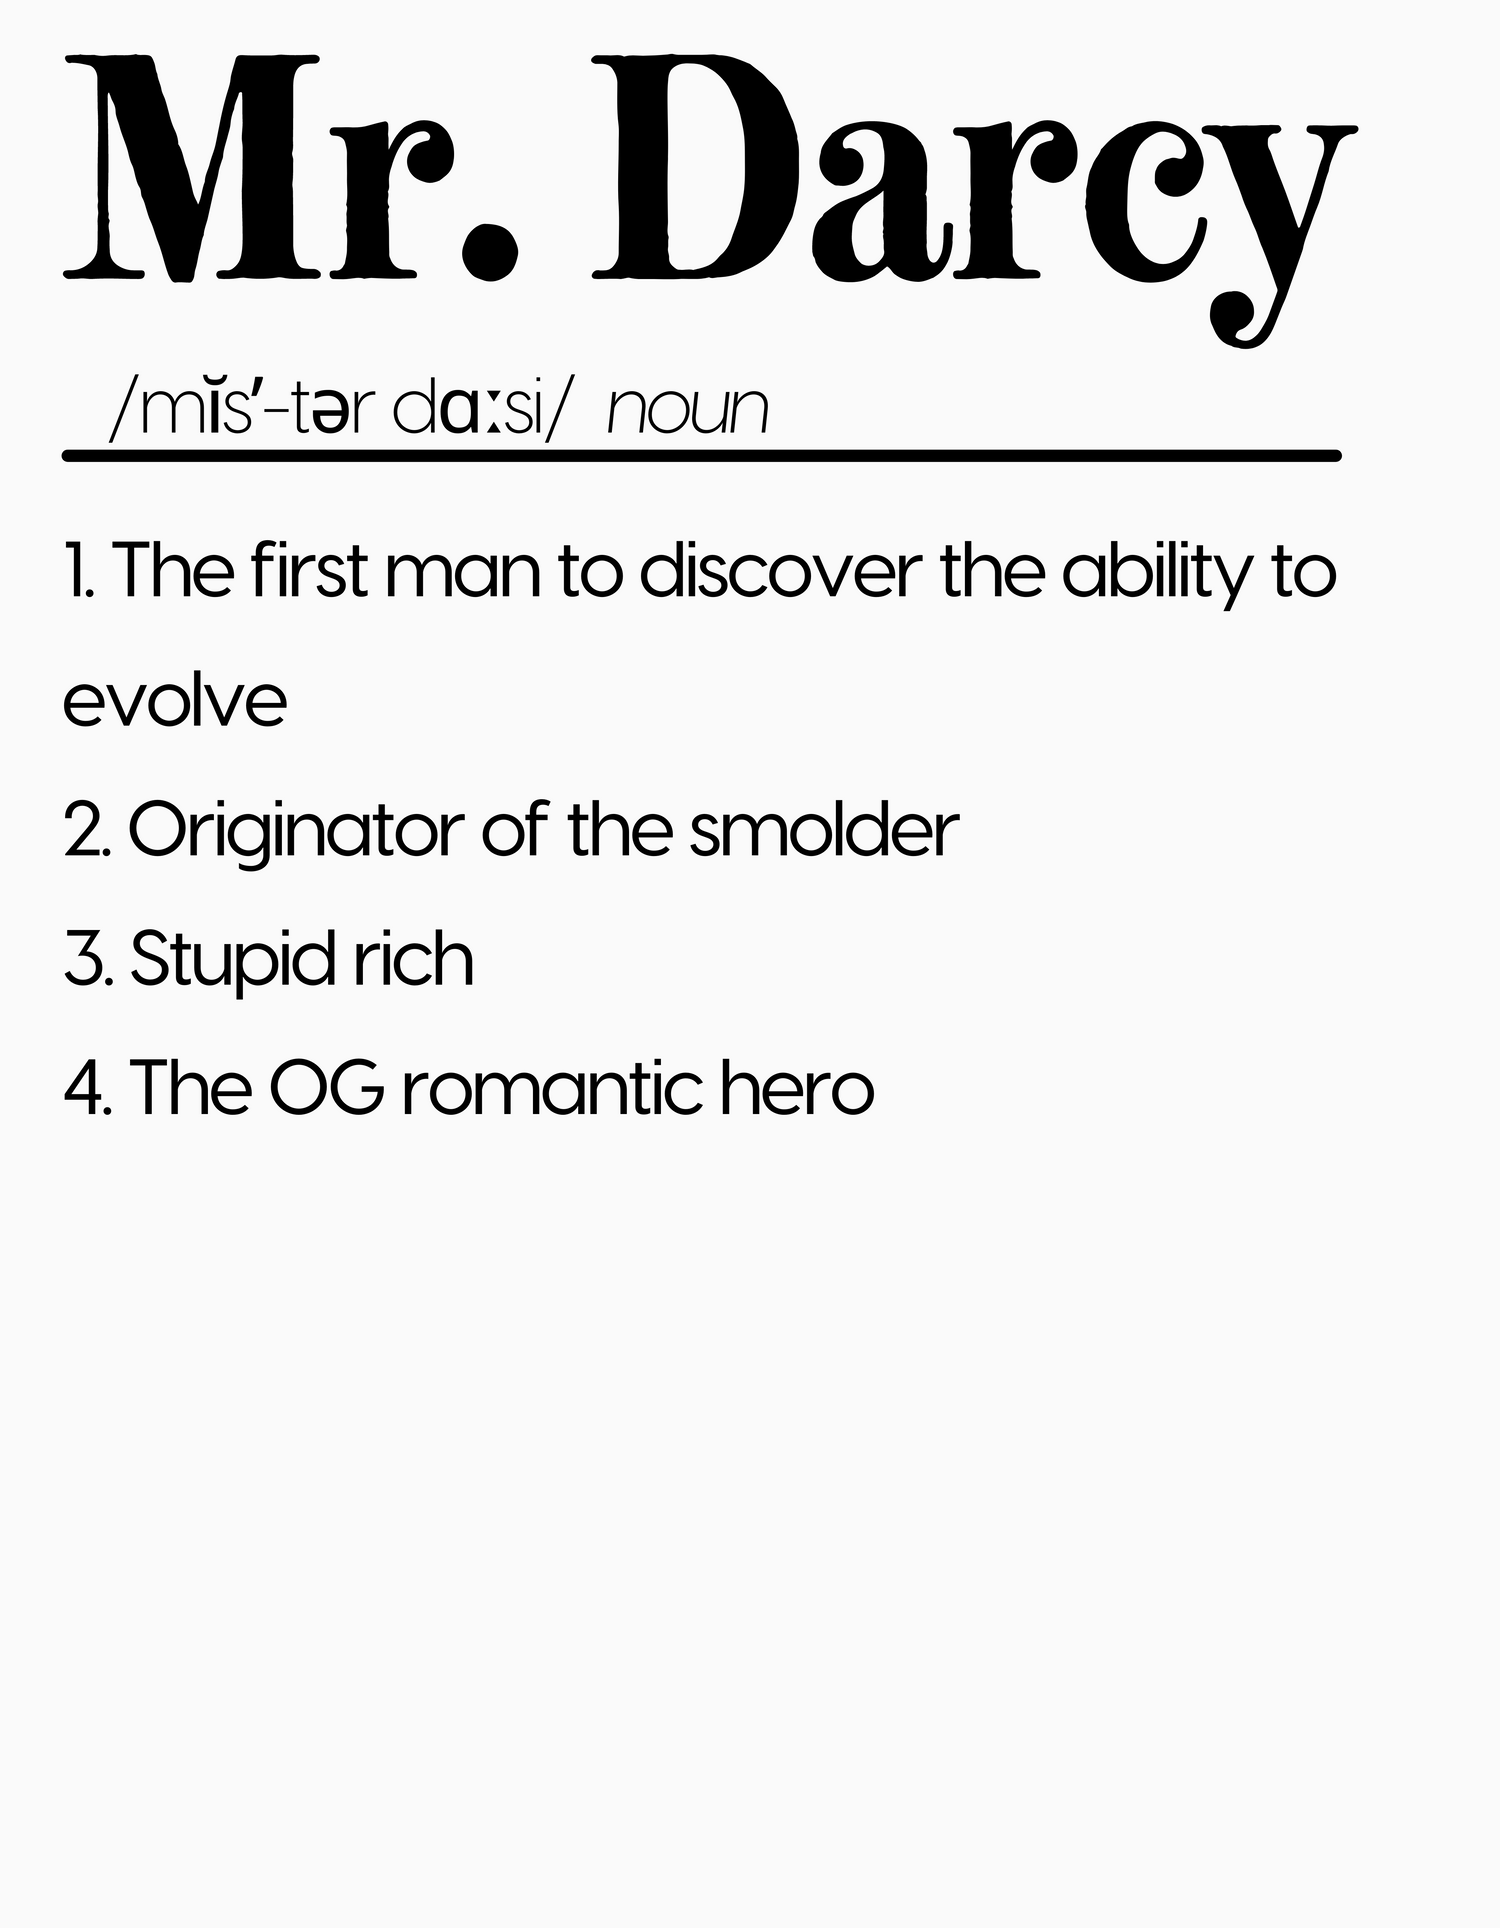 Definition of Mr. Darcy